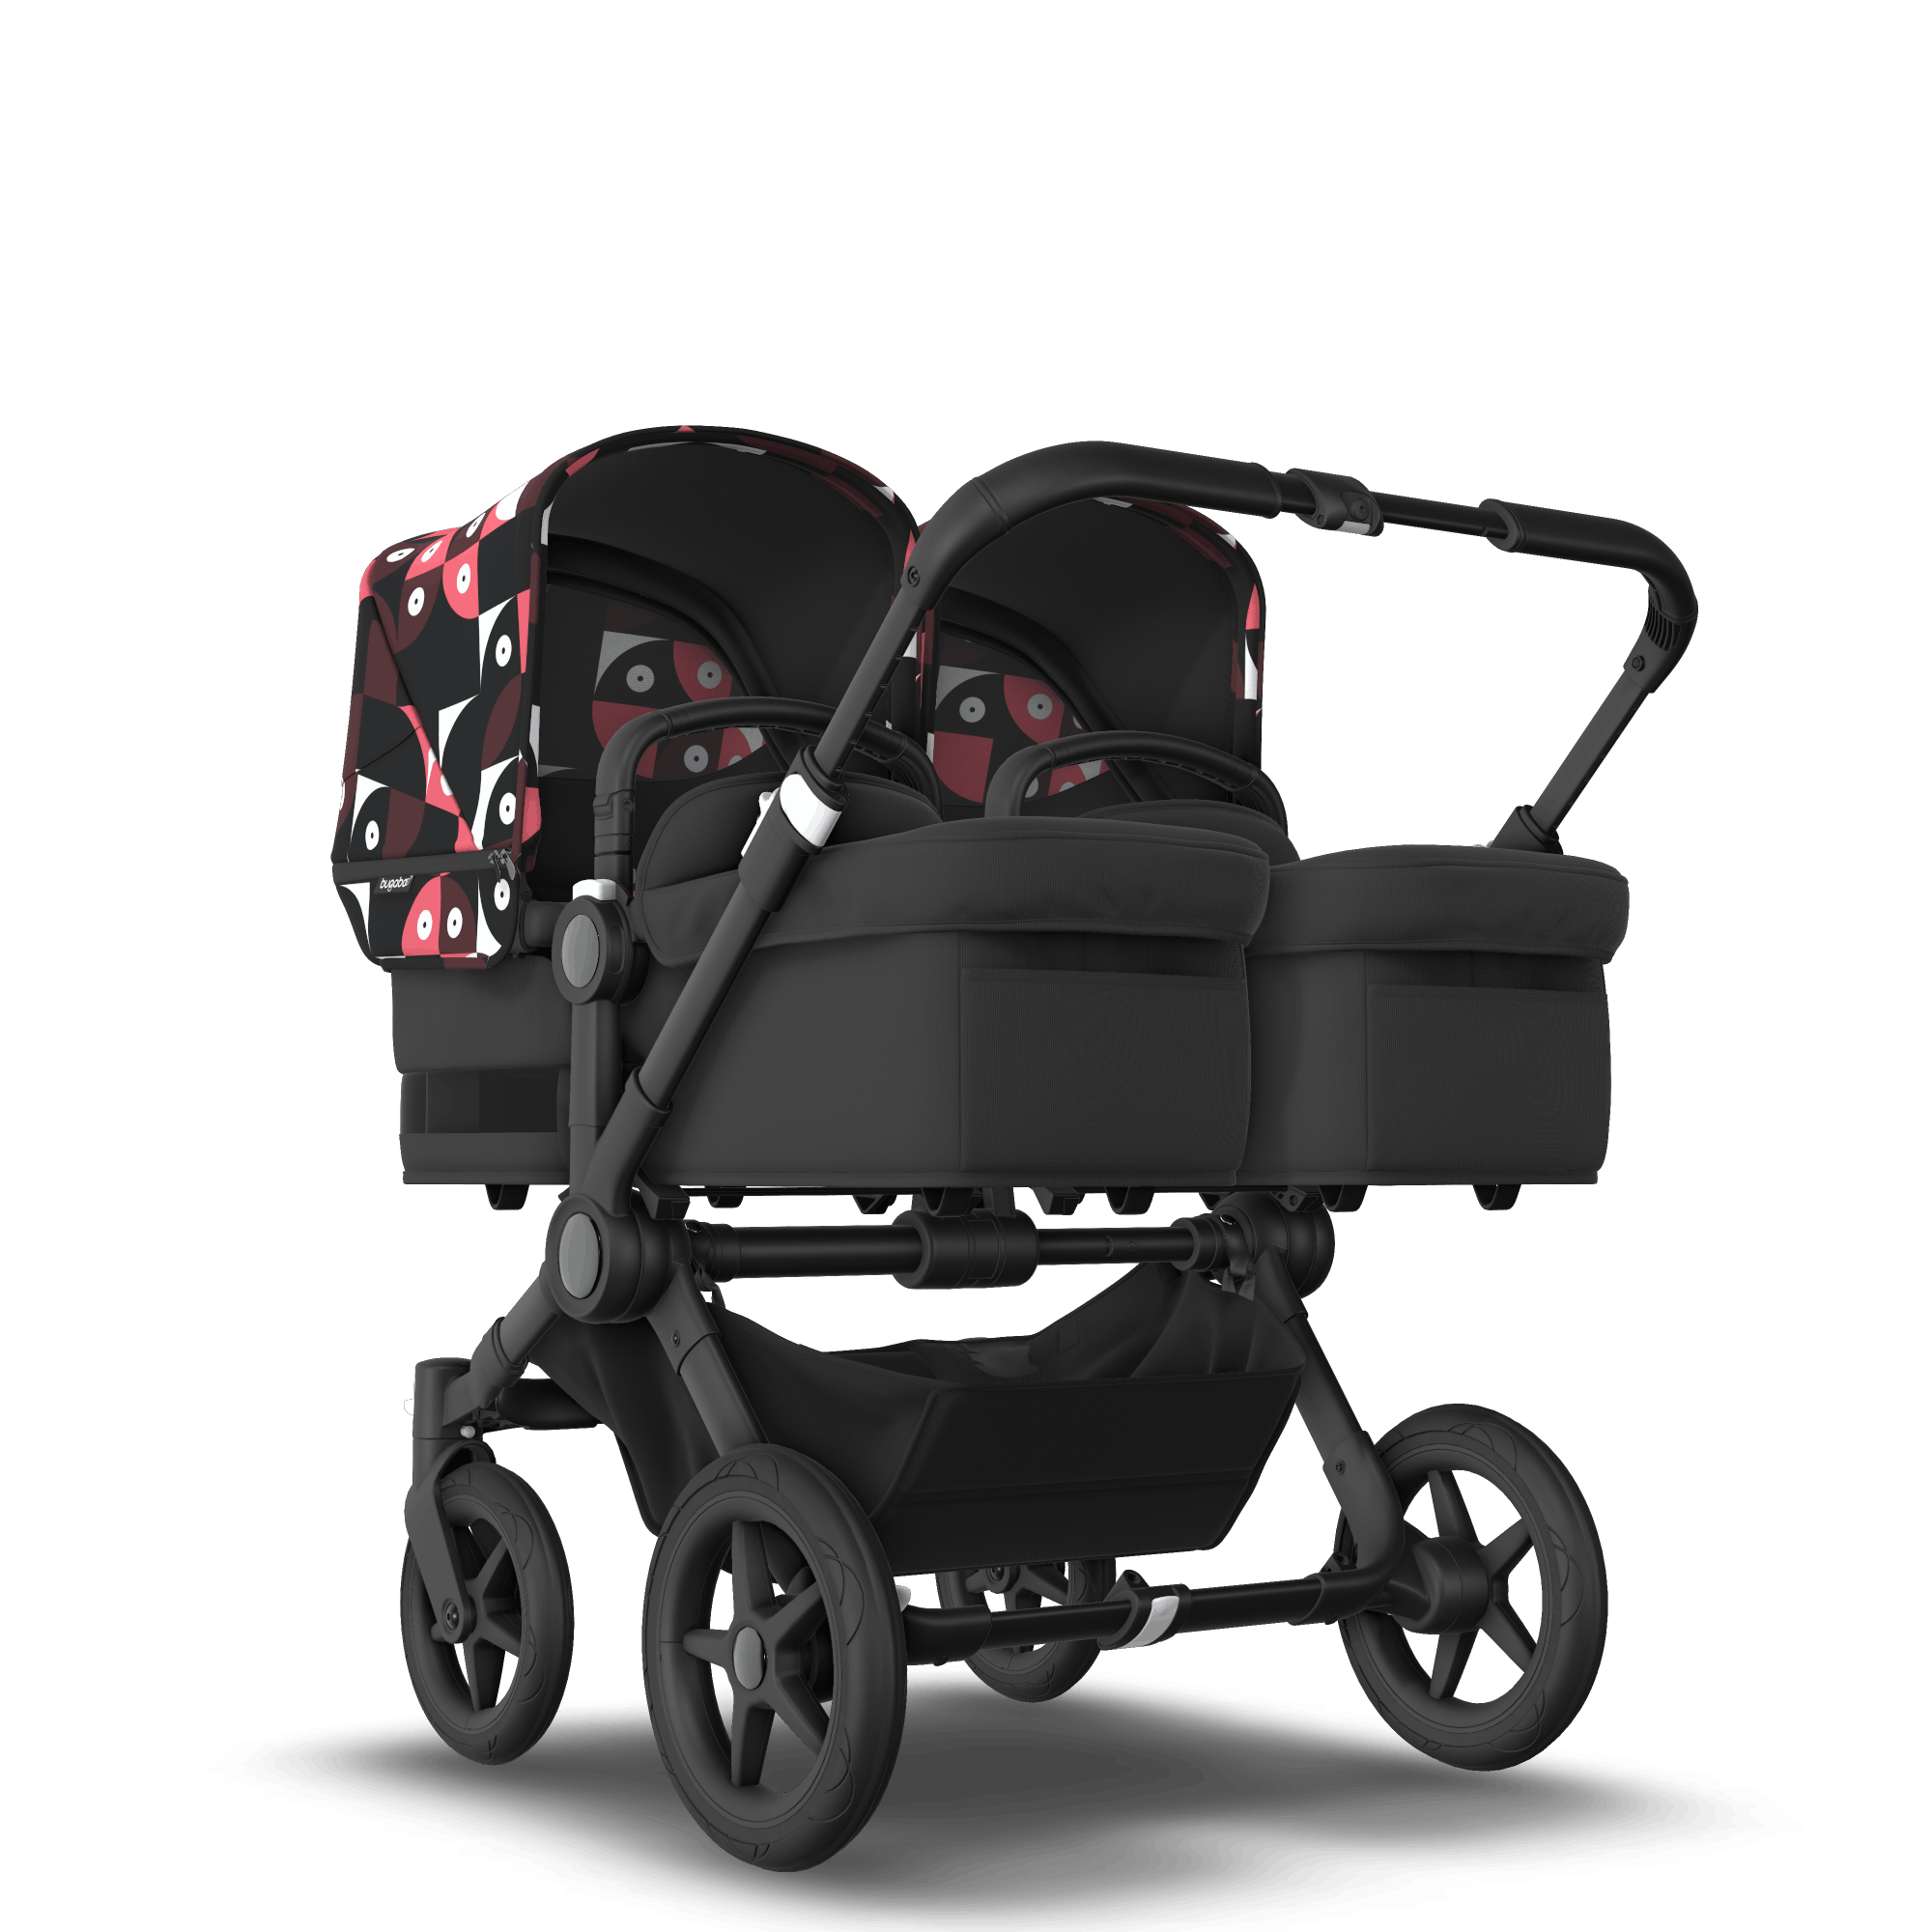 Bugaboo  Bugaboo Donkey 5 Twin bassinet and seat stroller black base midnight black fabrics animal explorer pink/red sun canopy